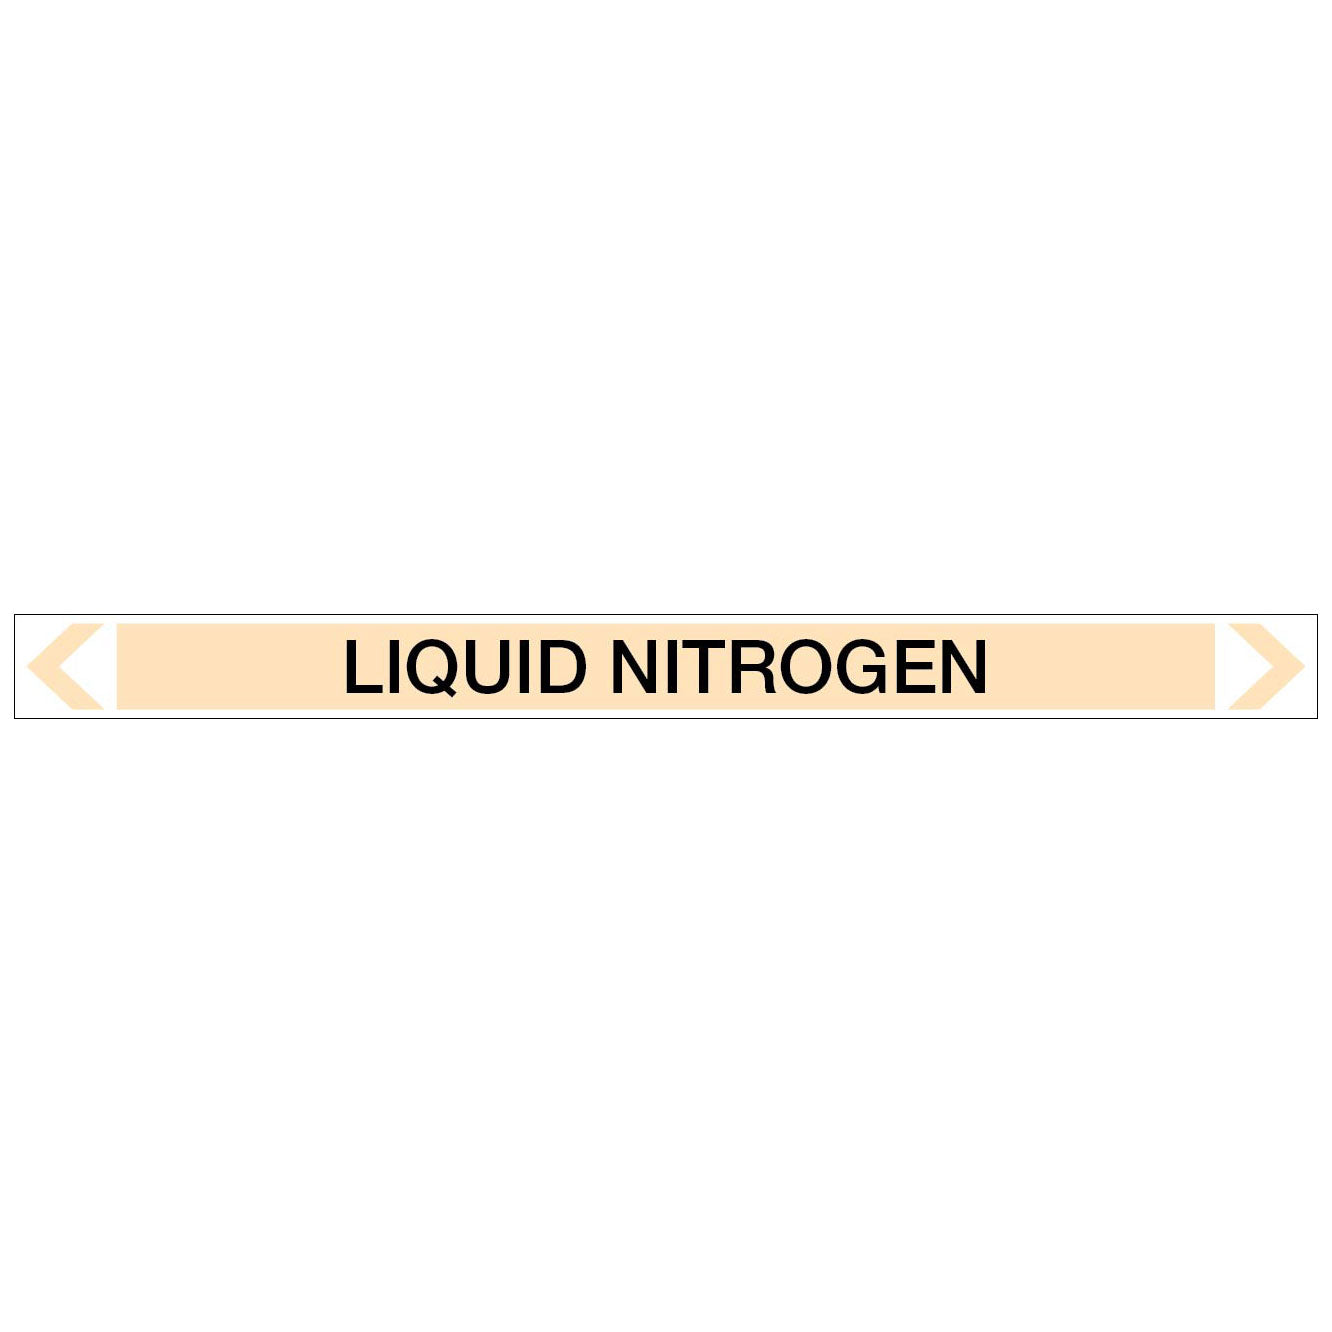 Gases - Liquid Nitrogen - Pipe Marker Sticker